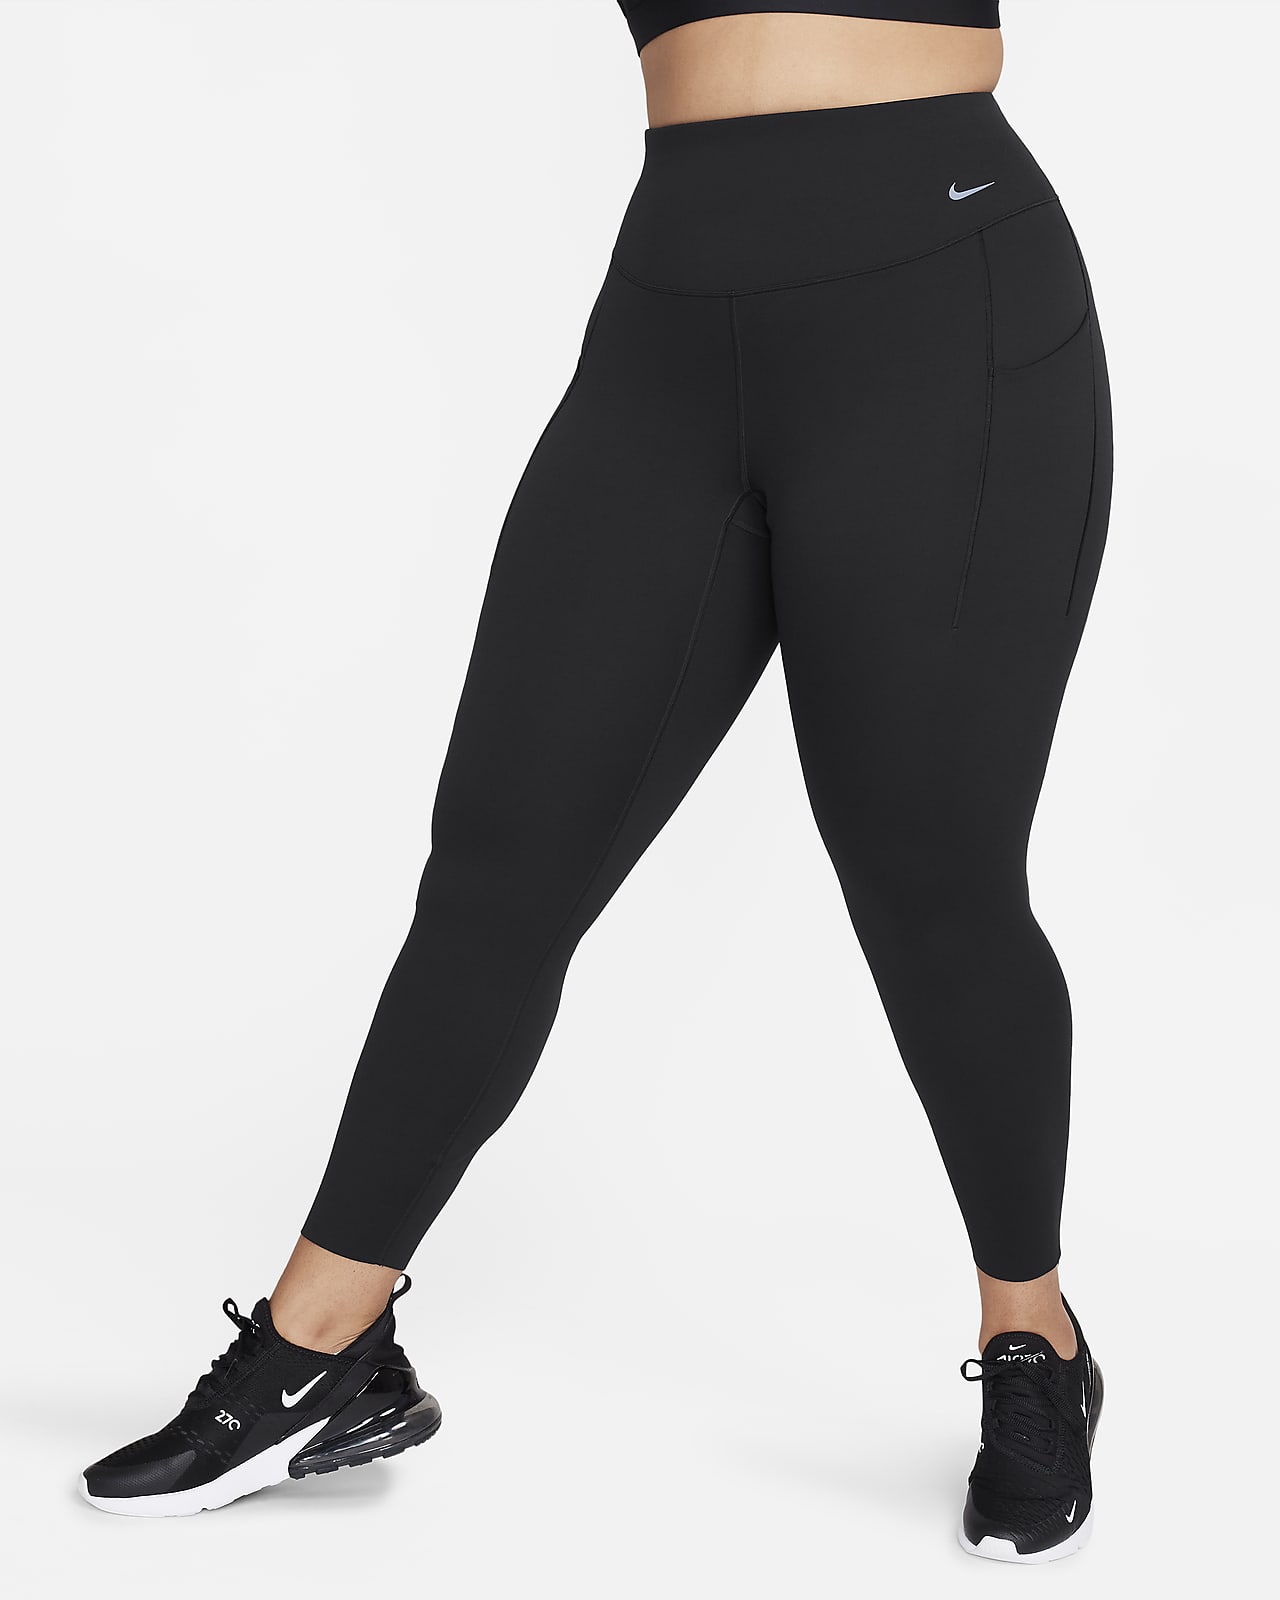 Women's mid-low leggings Nike Dri-FIT Universa - Baselayers - Textile -  Handball wear